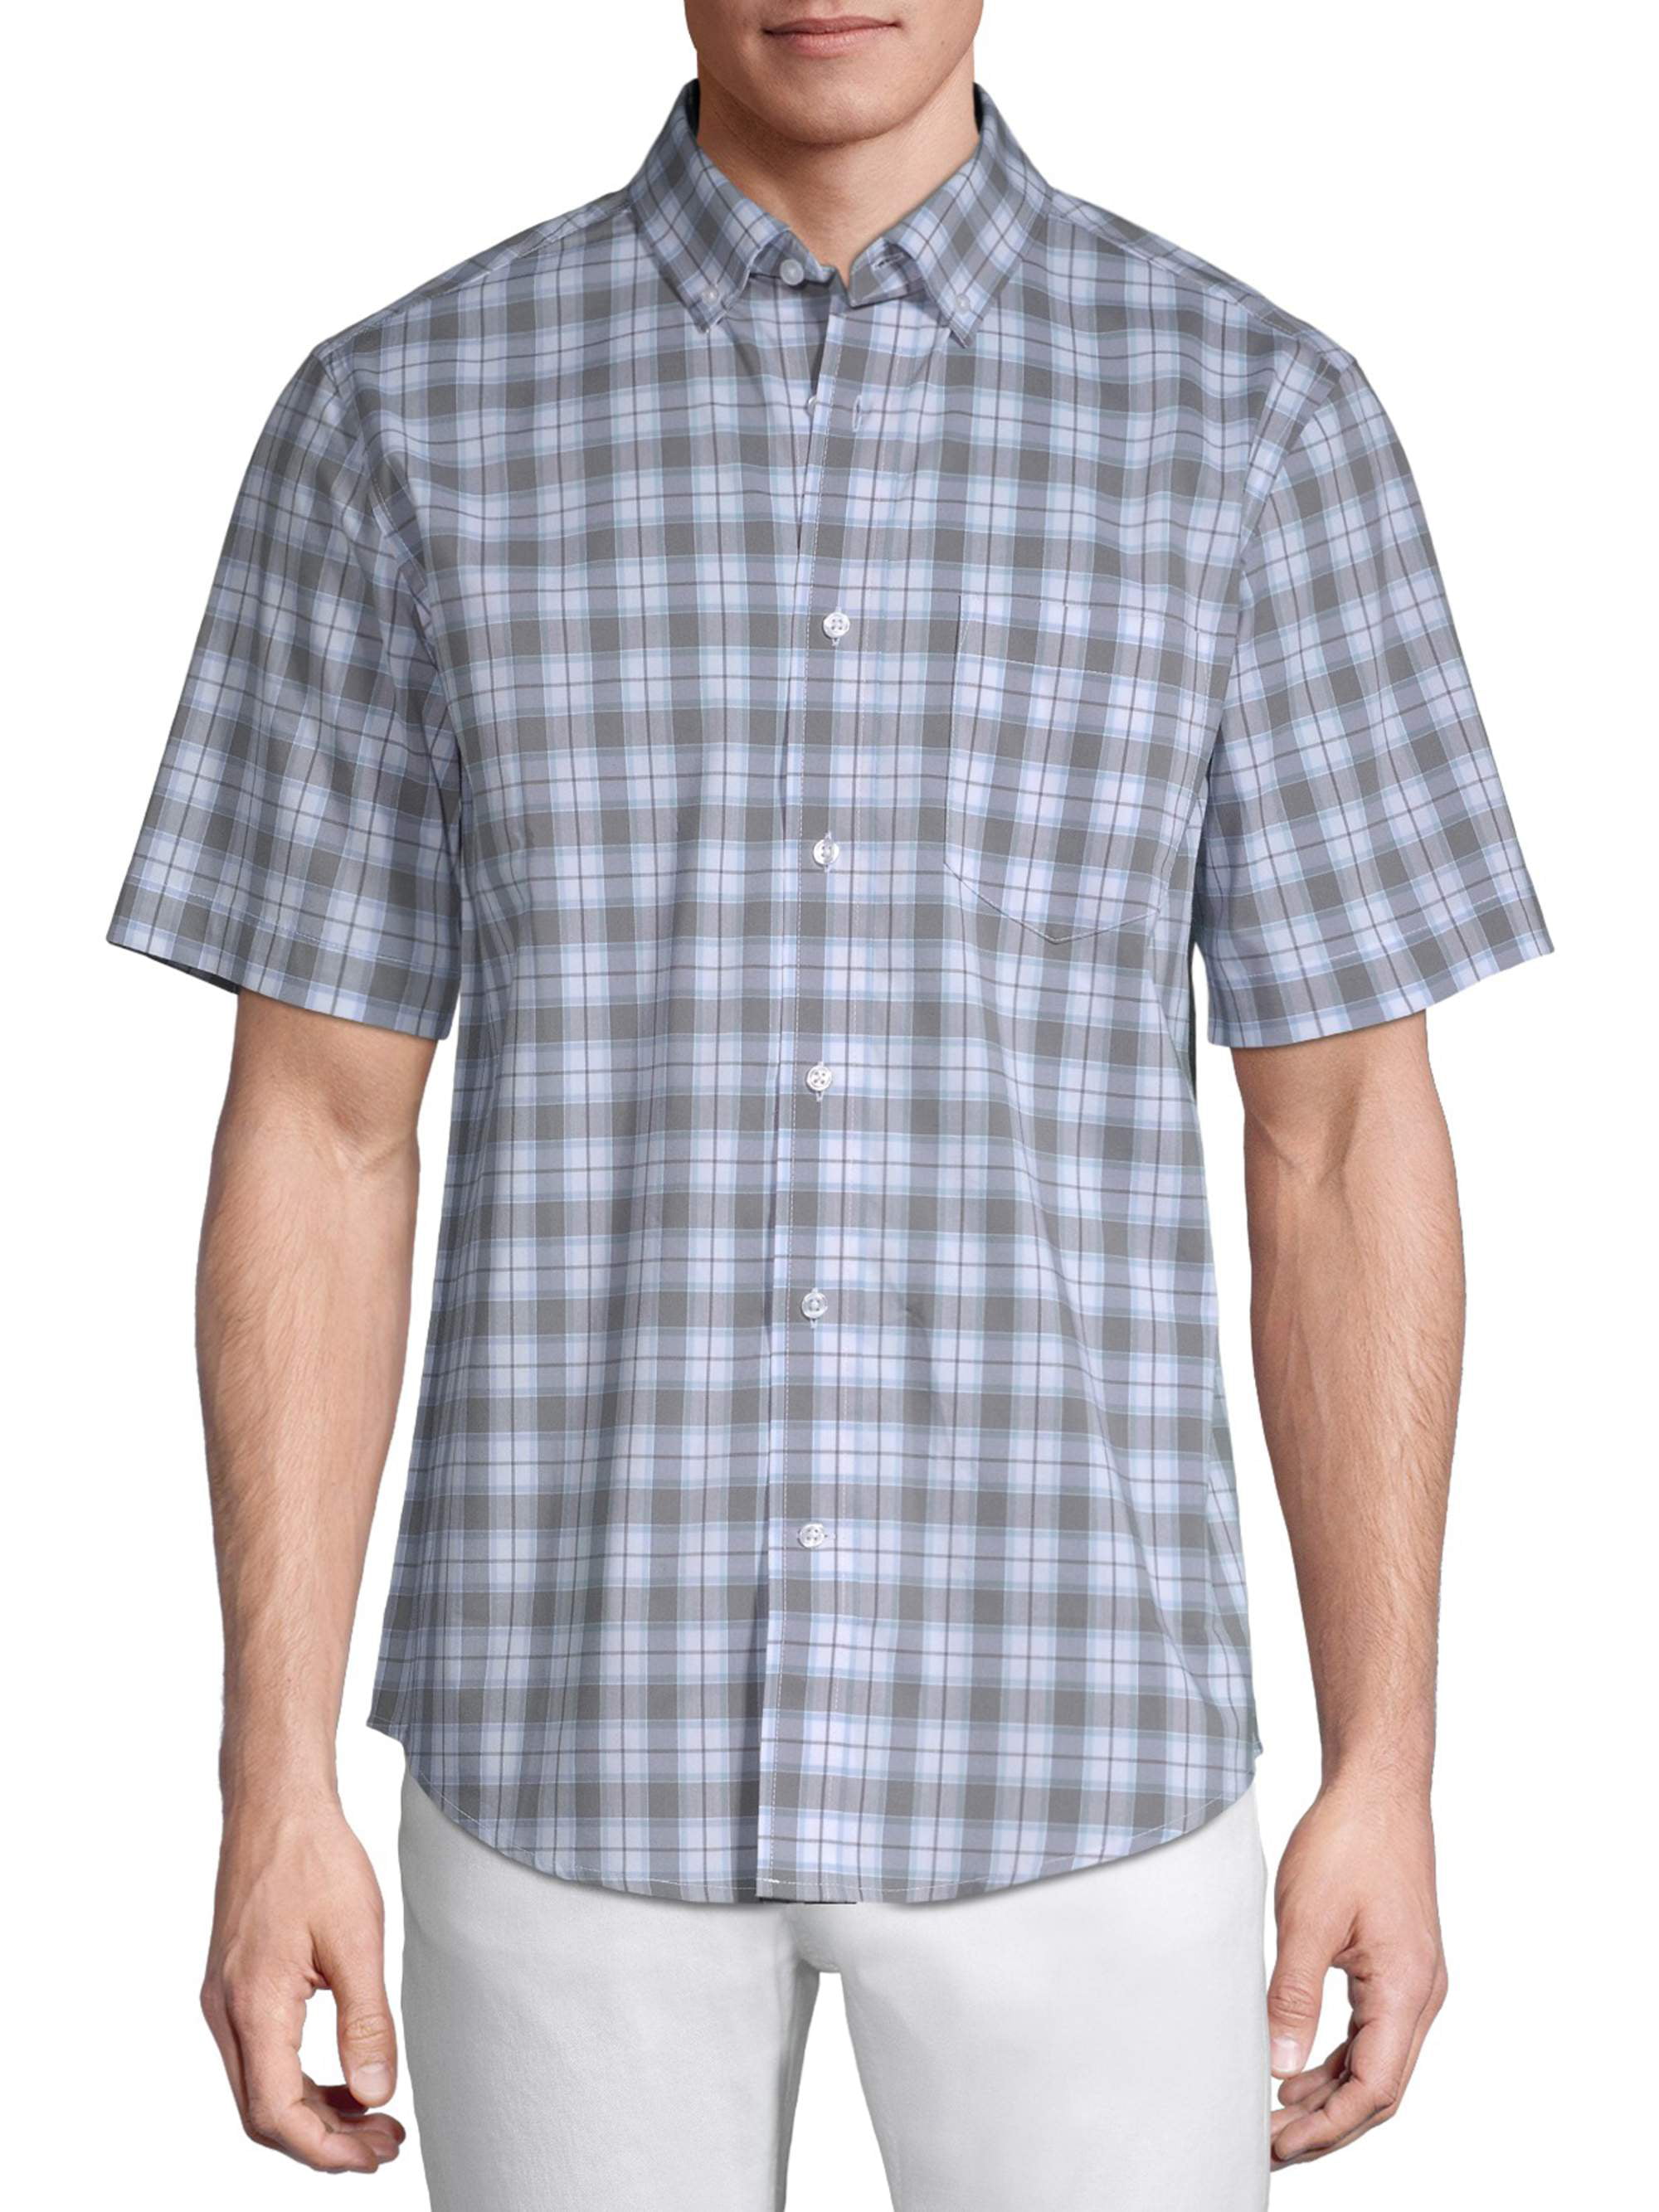 George Men's Short Sleeve Stretch Plaid Shirt - Walmart.com